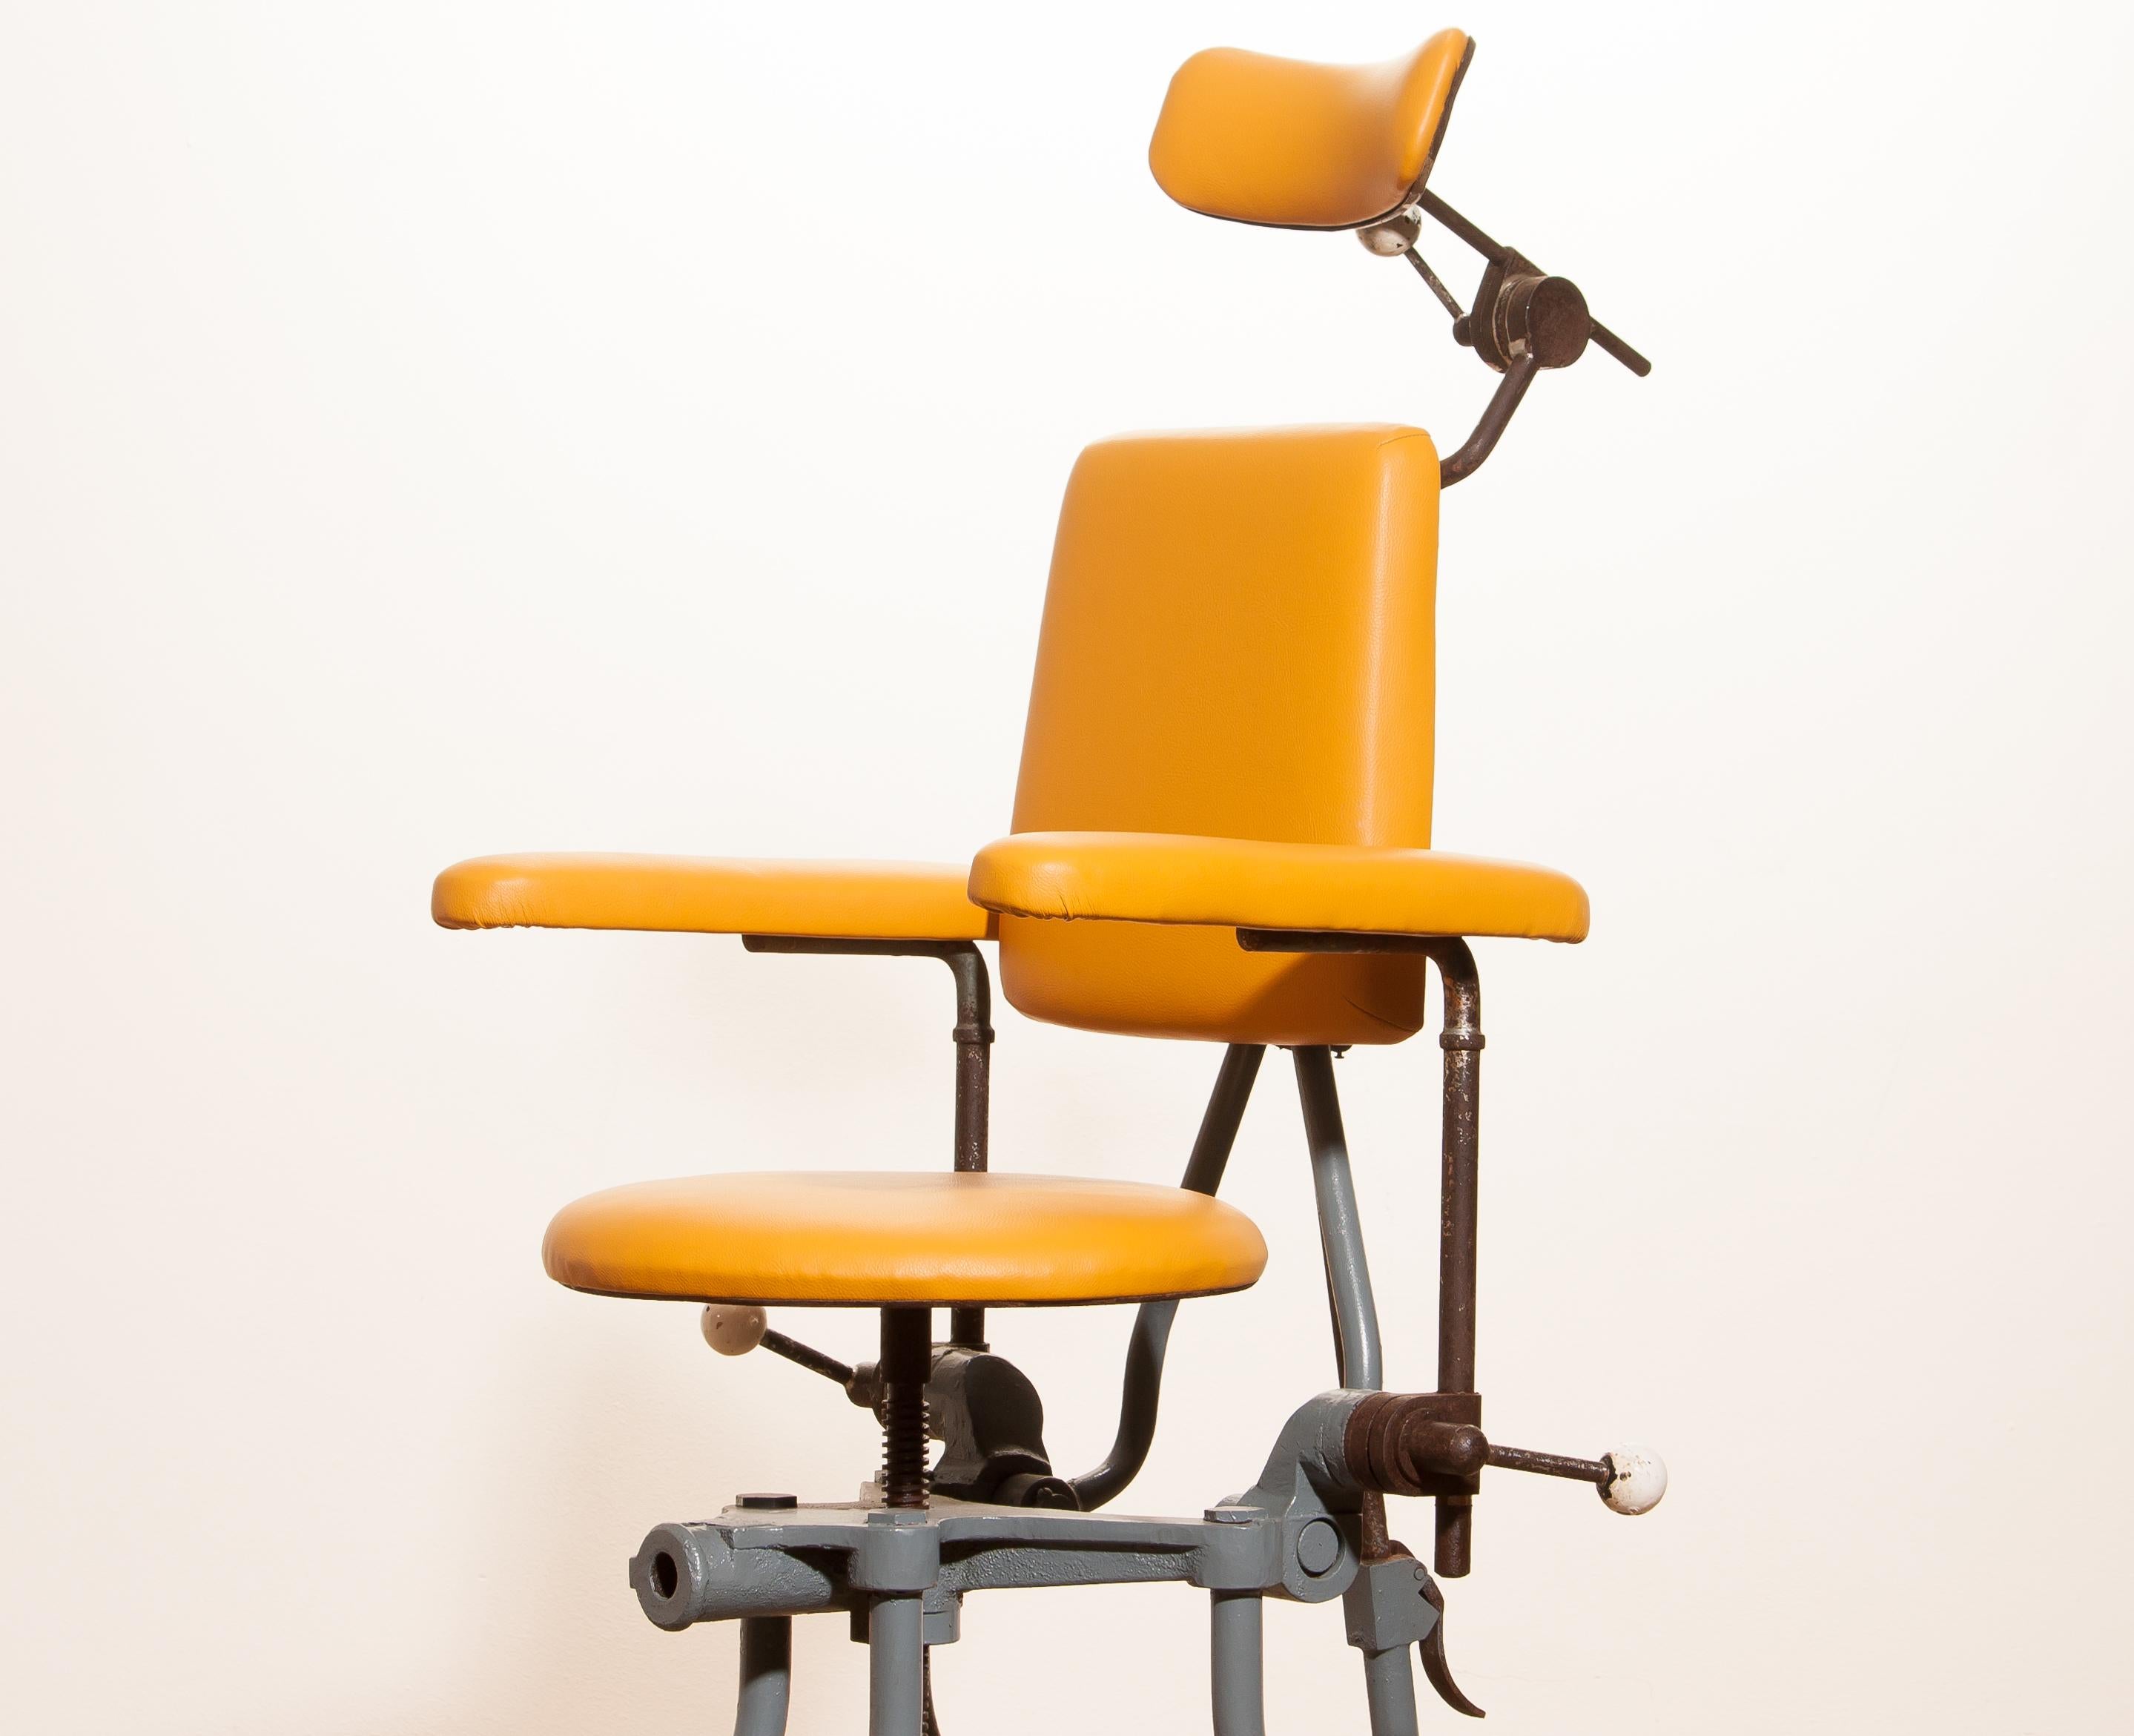 European 1930s, Steel Medical Chair